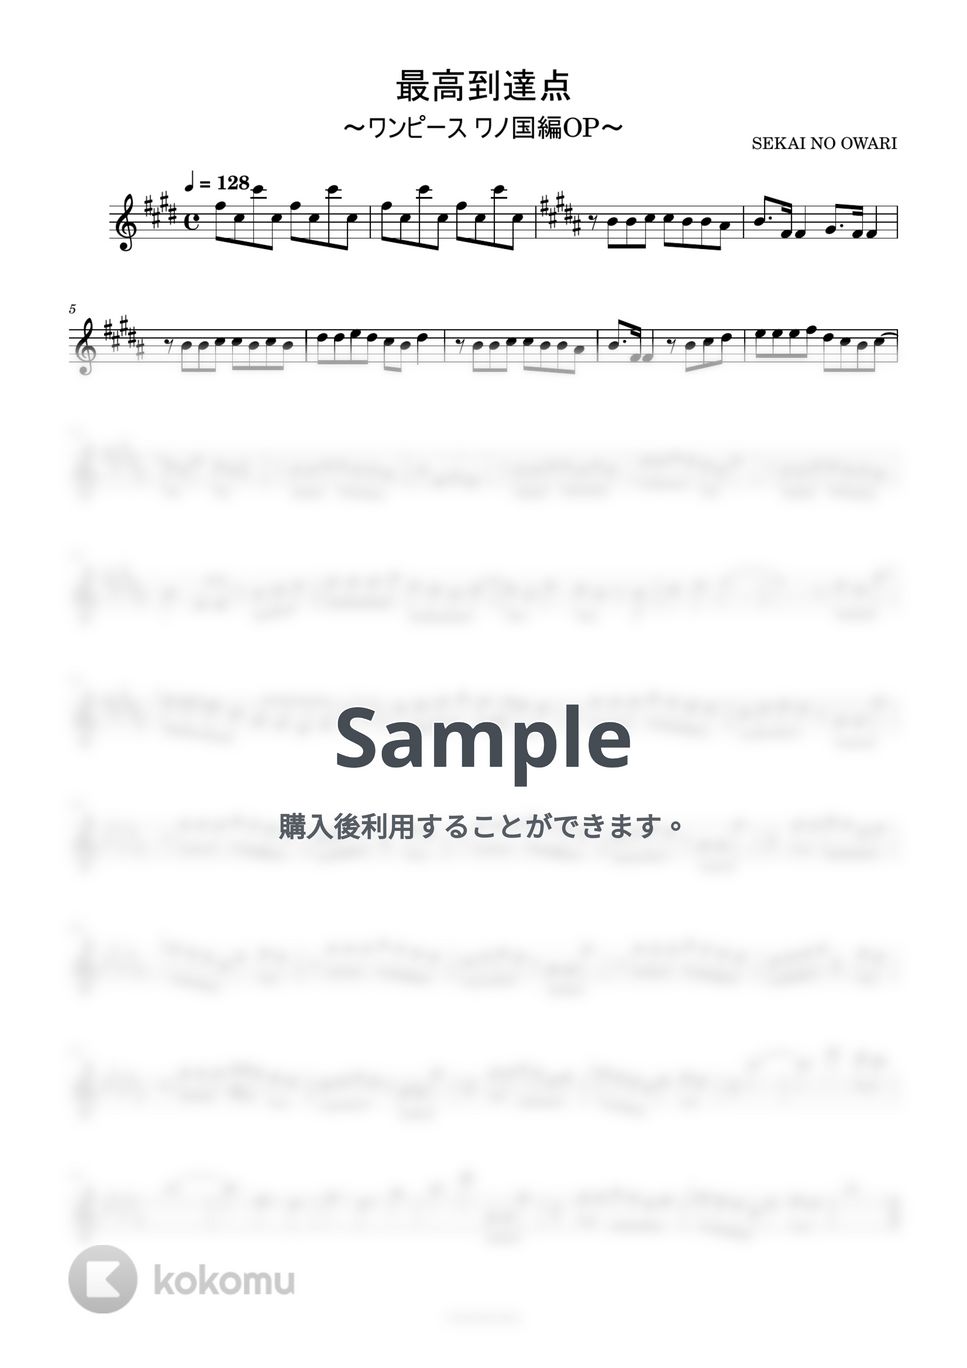 SEKAI NO OWARI - 最高到達点 (ワンピースOP/最高到達点/C管楽器対応/アニメサイズ/メロディー譜) by utamenma